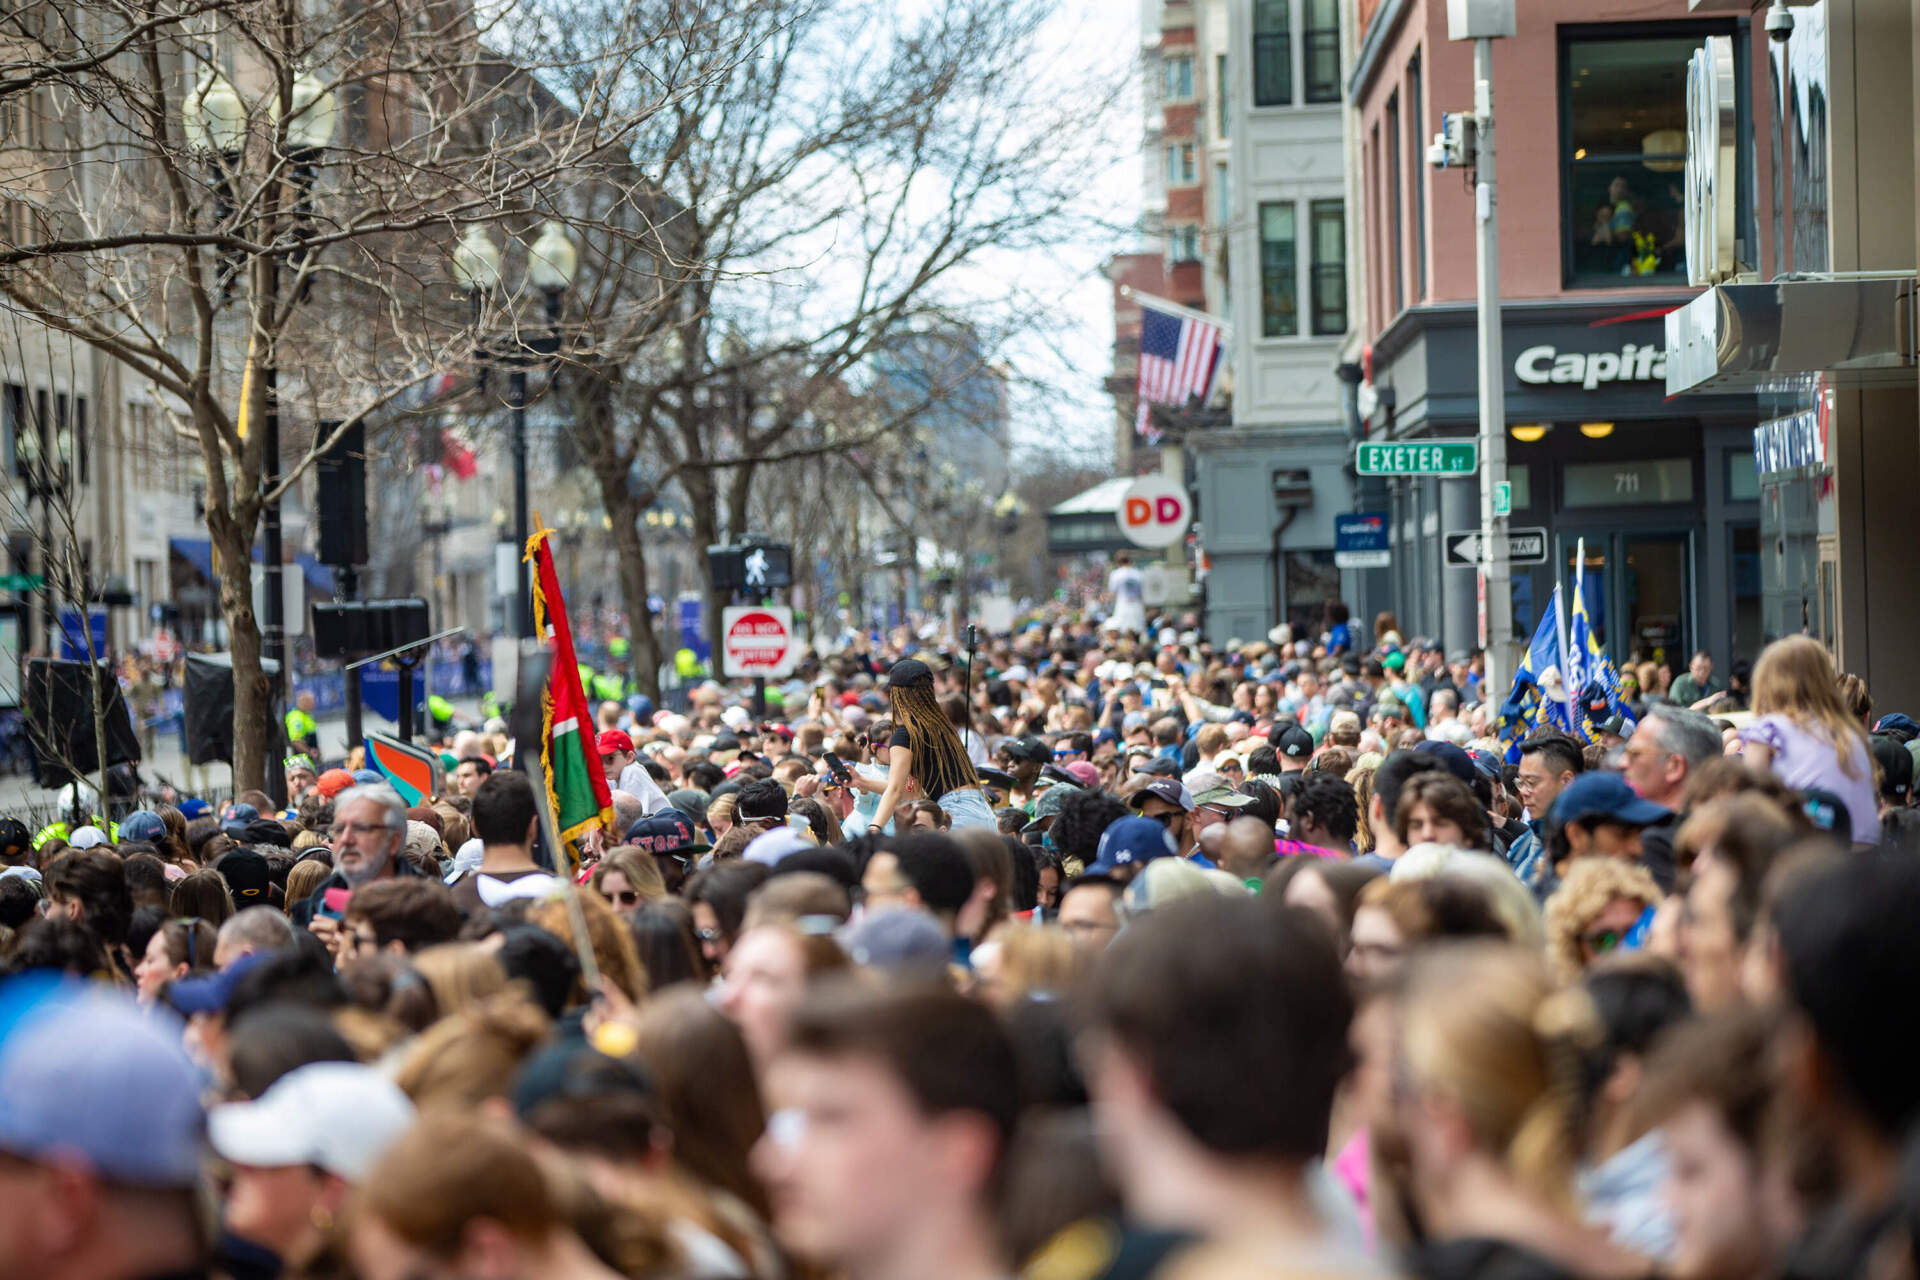 The crowd at the finish line on Boylston Street for the Boston Marathon. (Jesse Costa/WBUR)